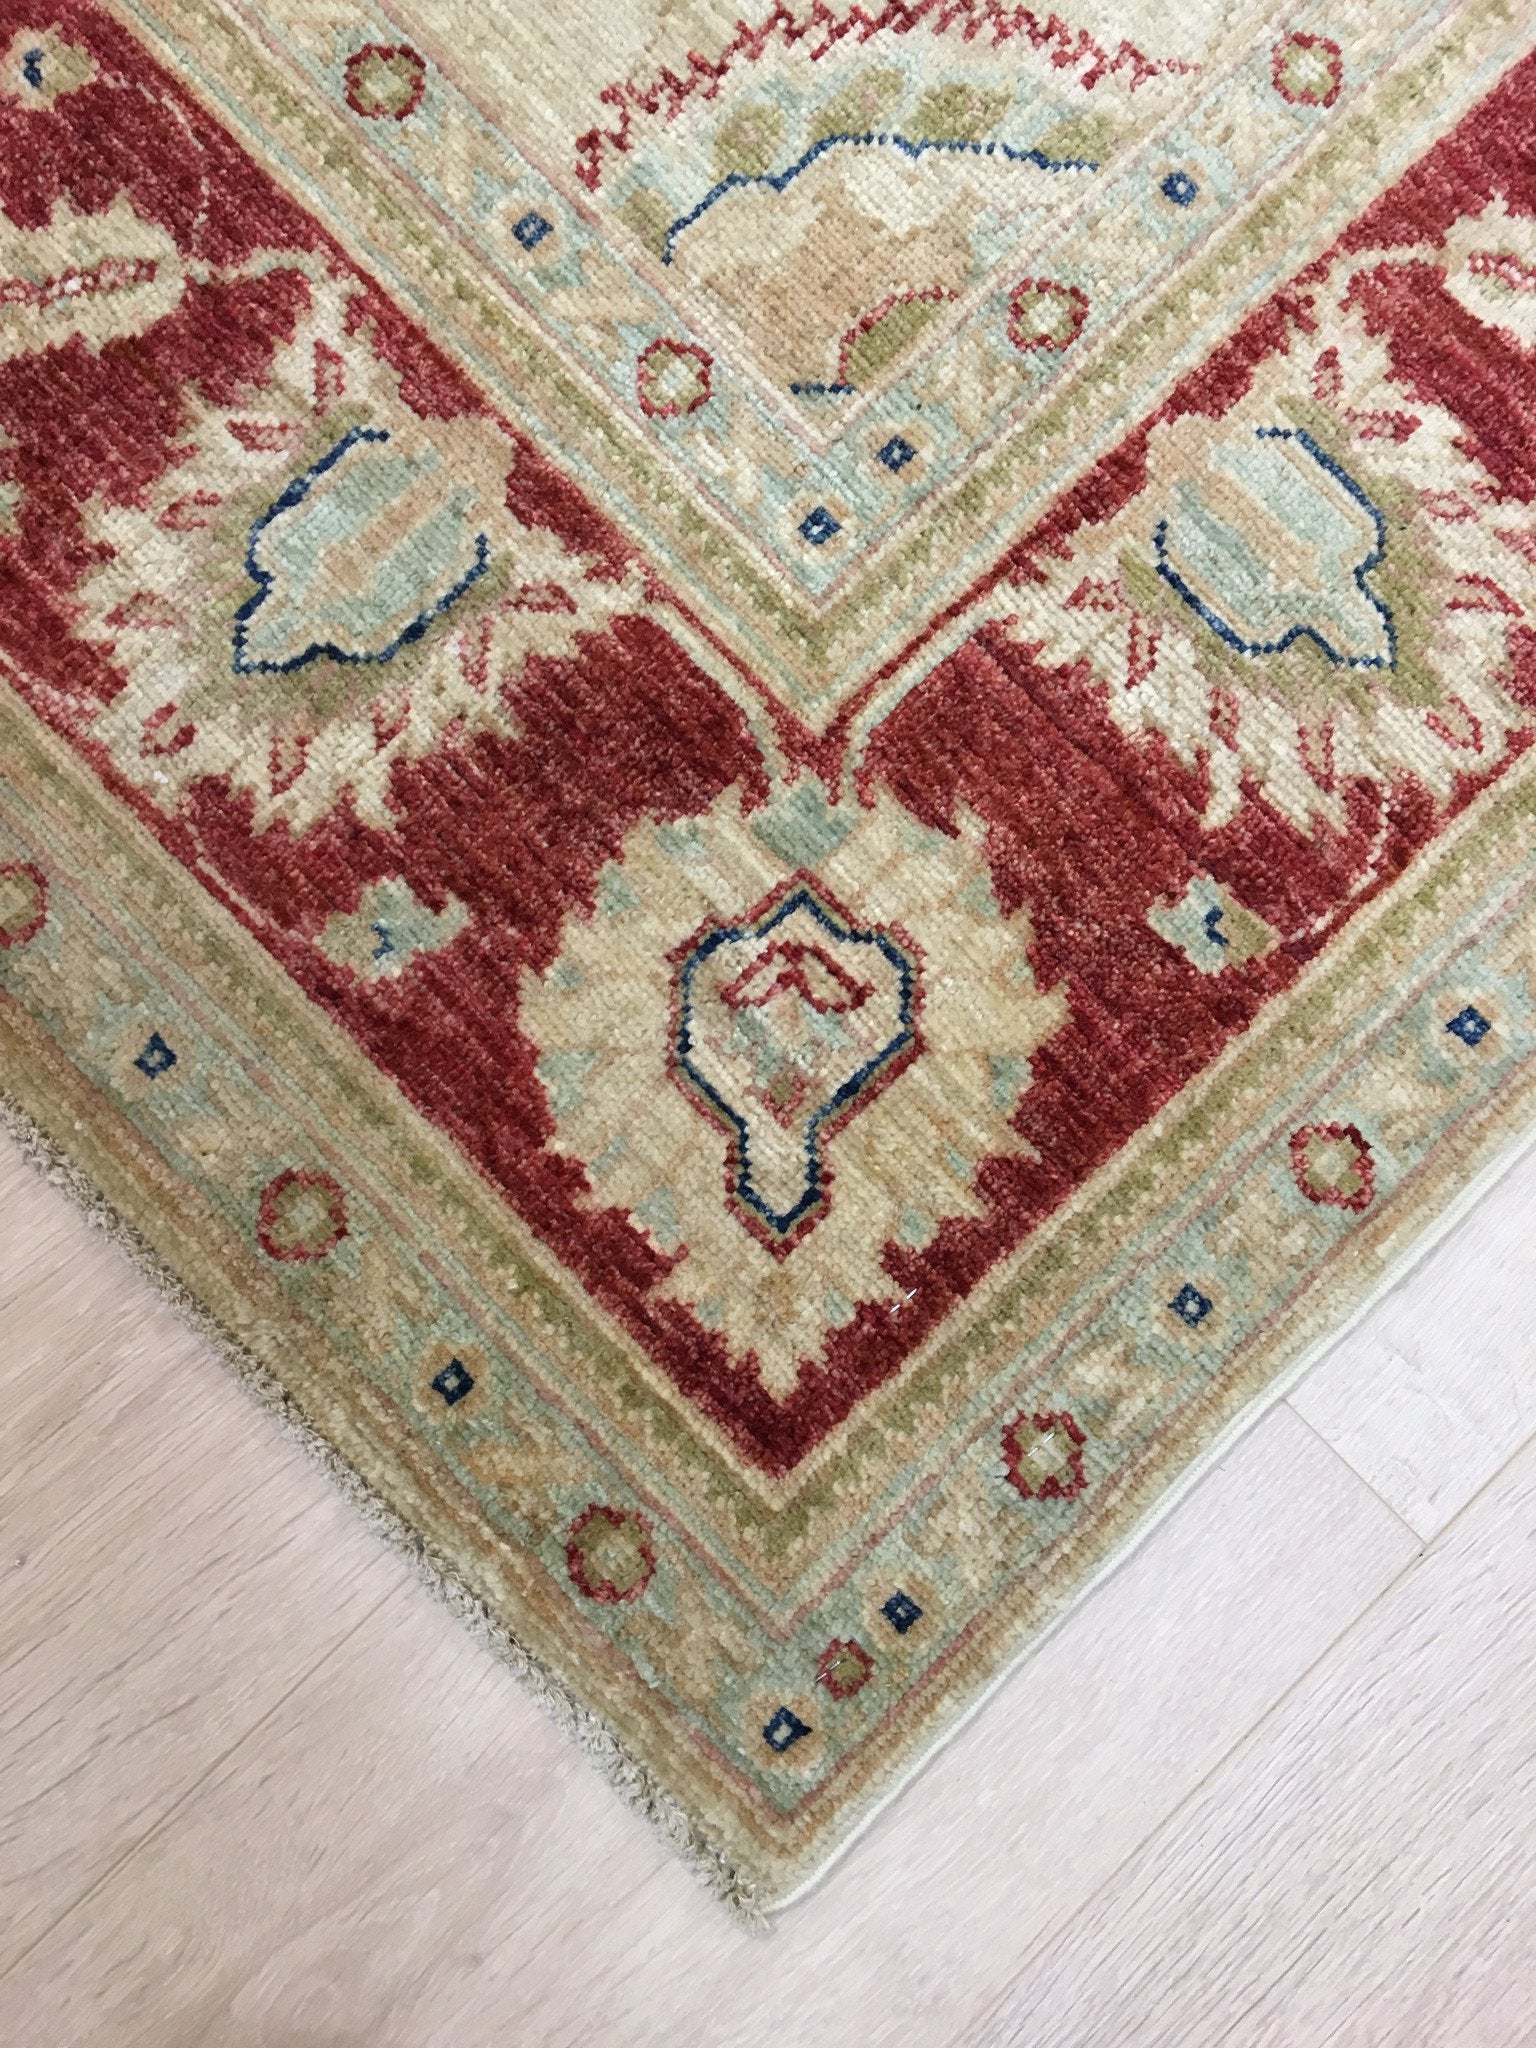 Chobi 203x153 - Omid Carpets